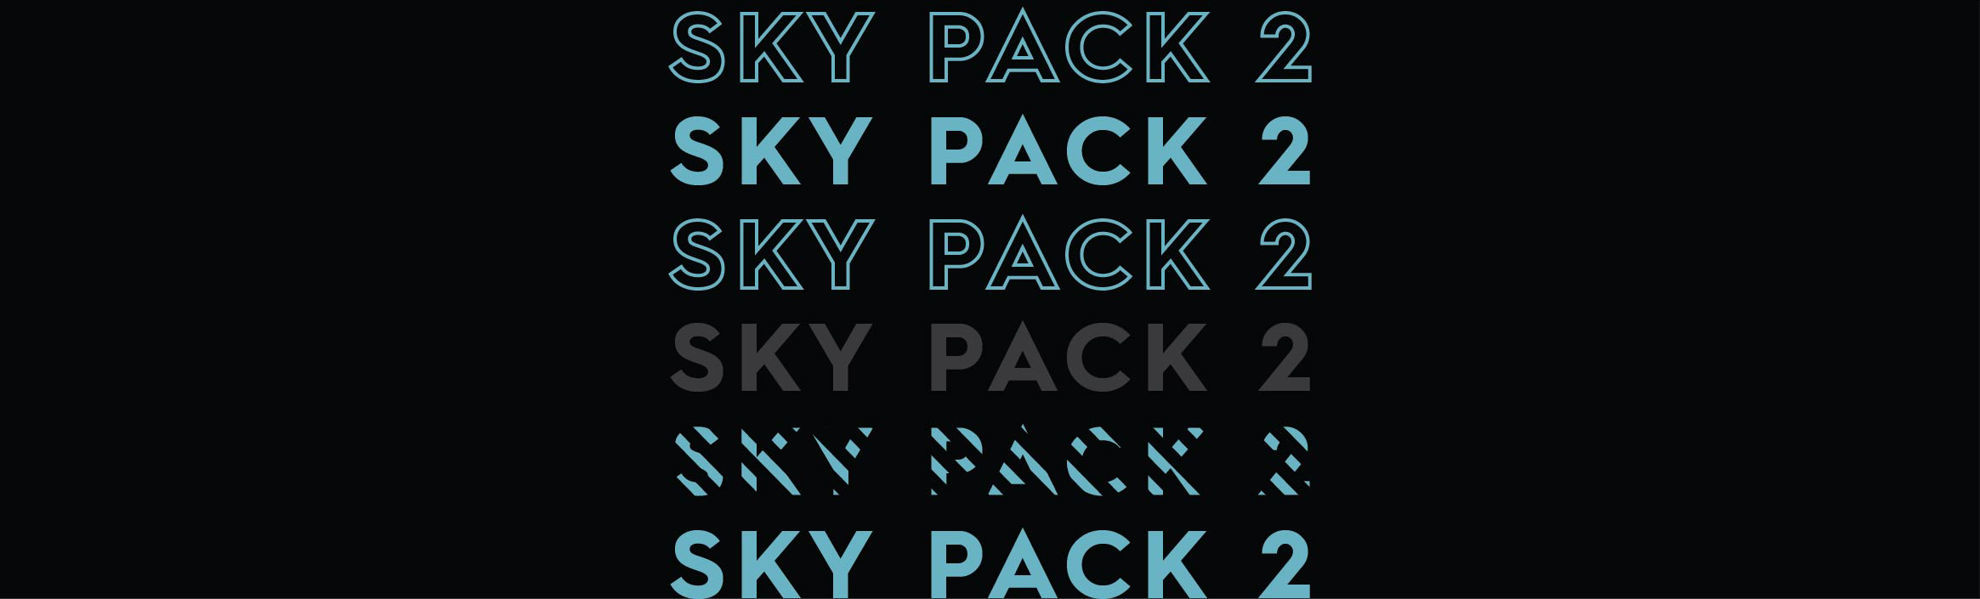 Sky Pack 2 image